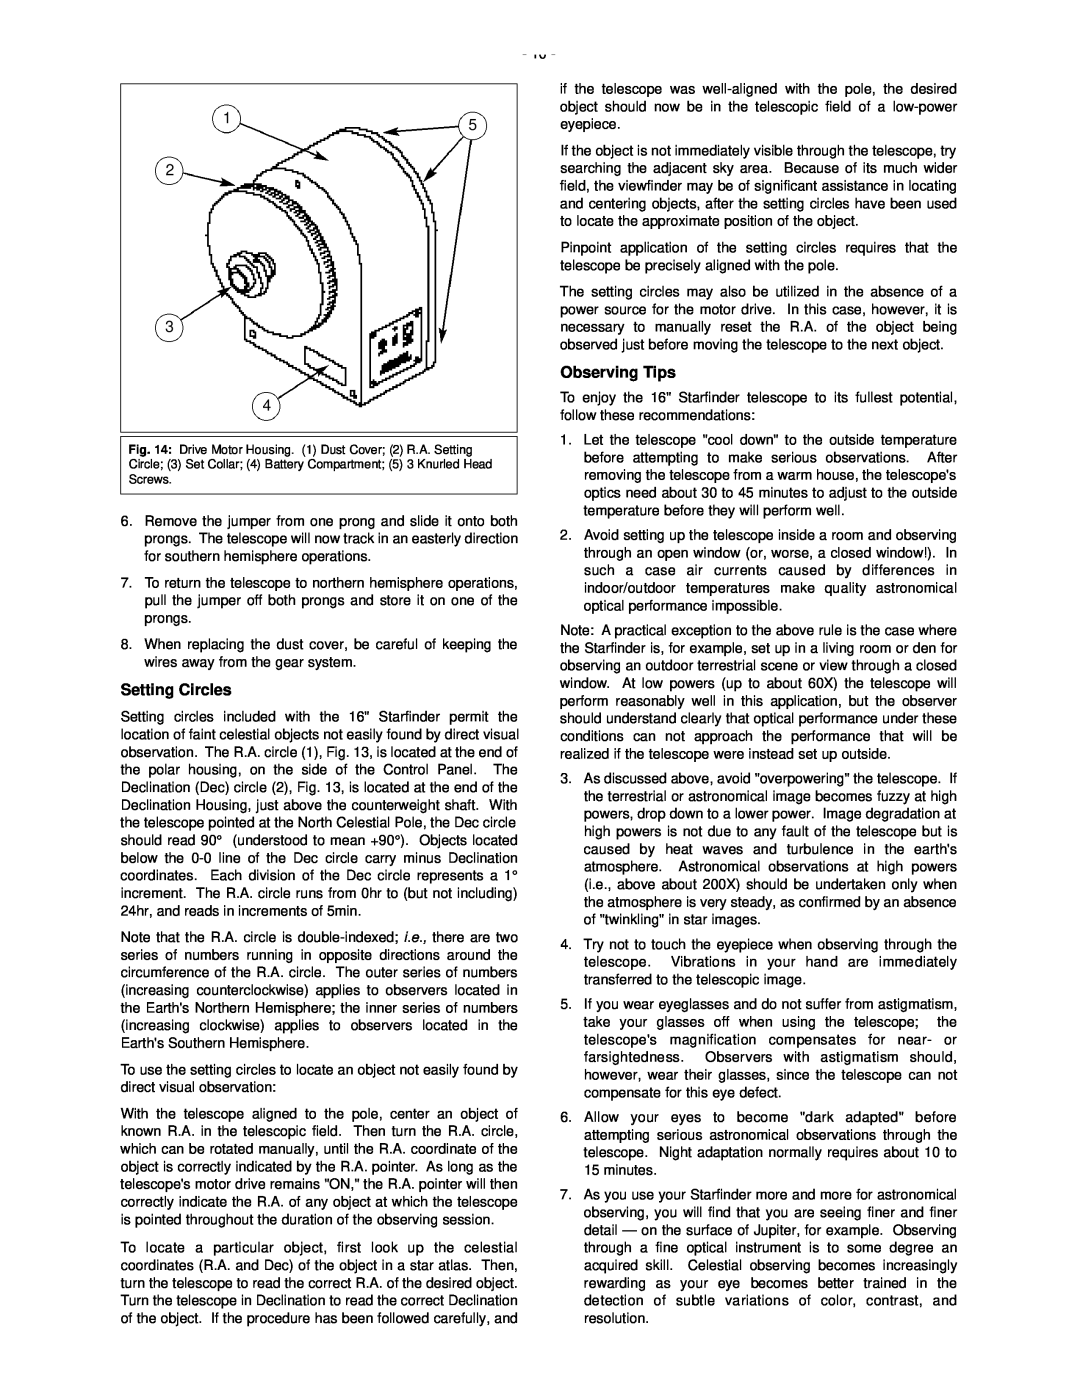 Meade 50 AZ-T instruction manual Setting Circles, Observing Tips 